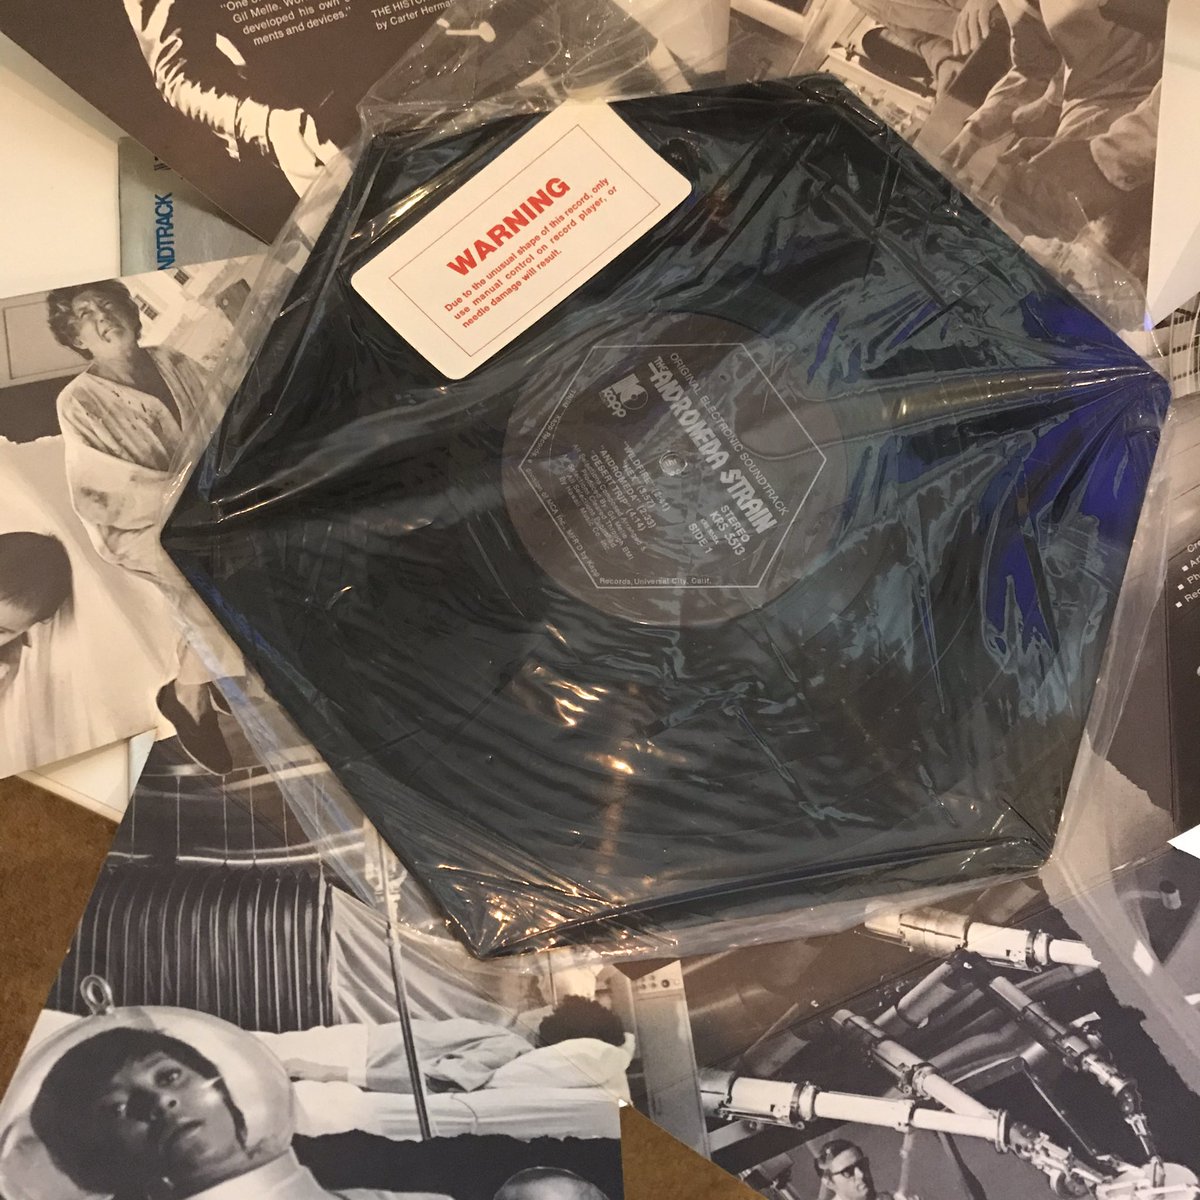 Ta @recordsfriendly for The Andromeda Strain on daft/fantastic hexagonal vinyl 😍